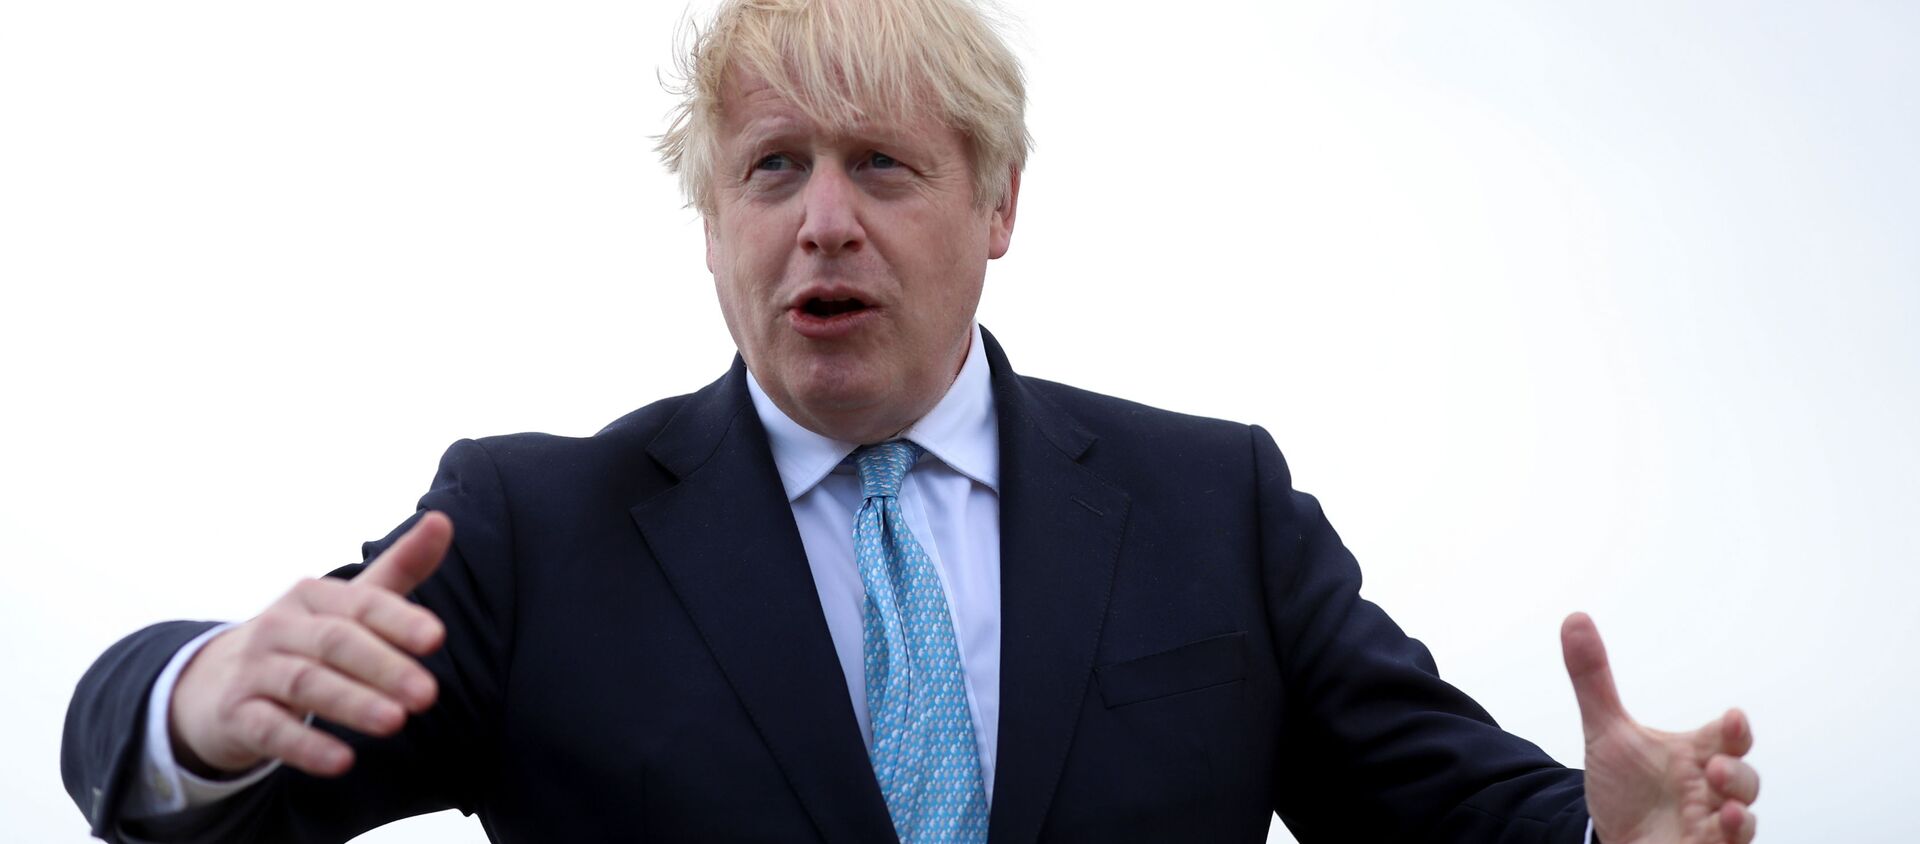 Britain's Prime Minister Boris Johnson speaks at Jacksons Wharf Marina in Hartlepool following local elections, Britain, 7 May 2021 - Sputnik International, 1920, 30.05.2021